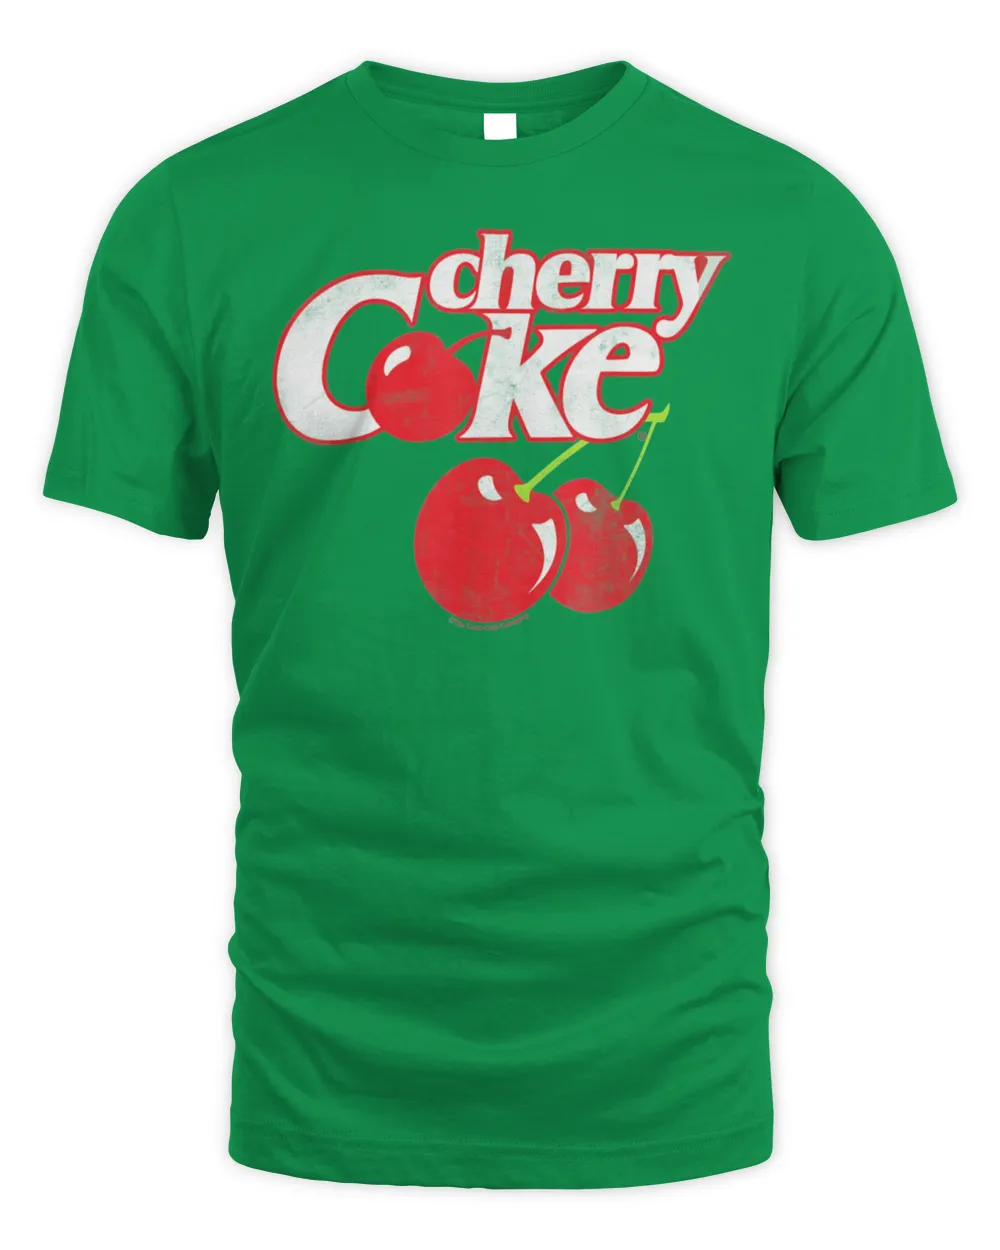 Coca-Cola Cherry Coke Logo T-Shirt